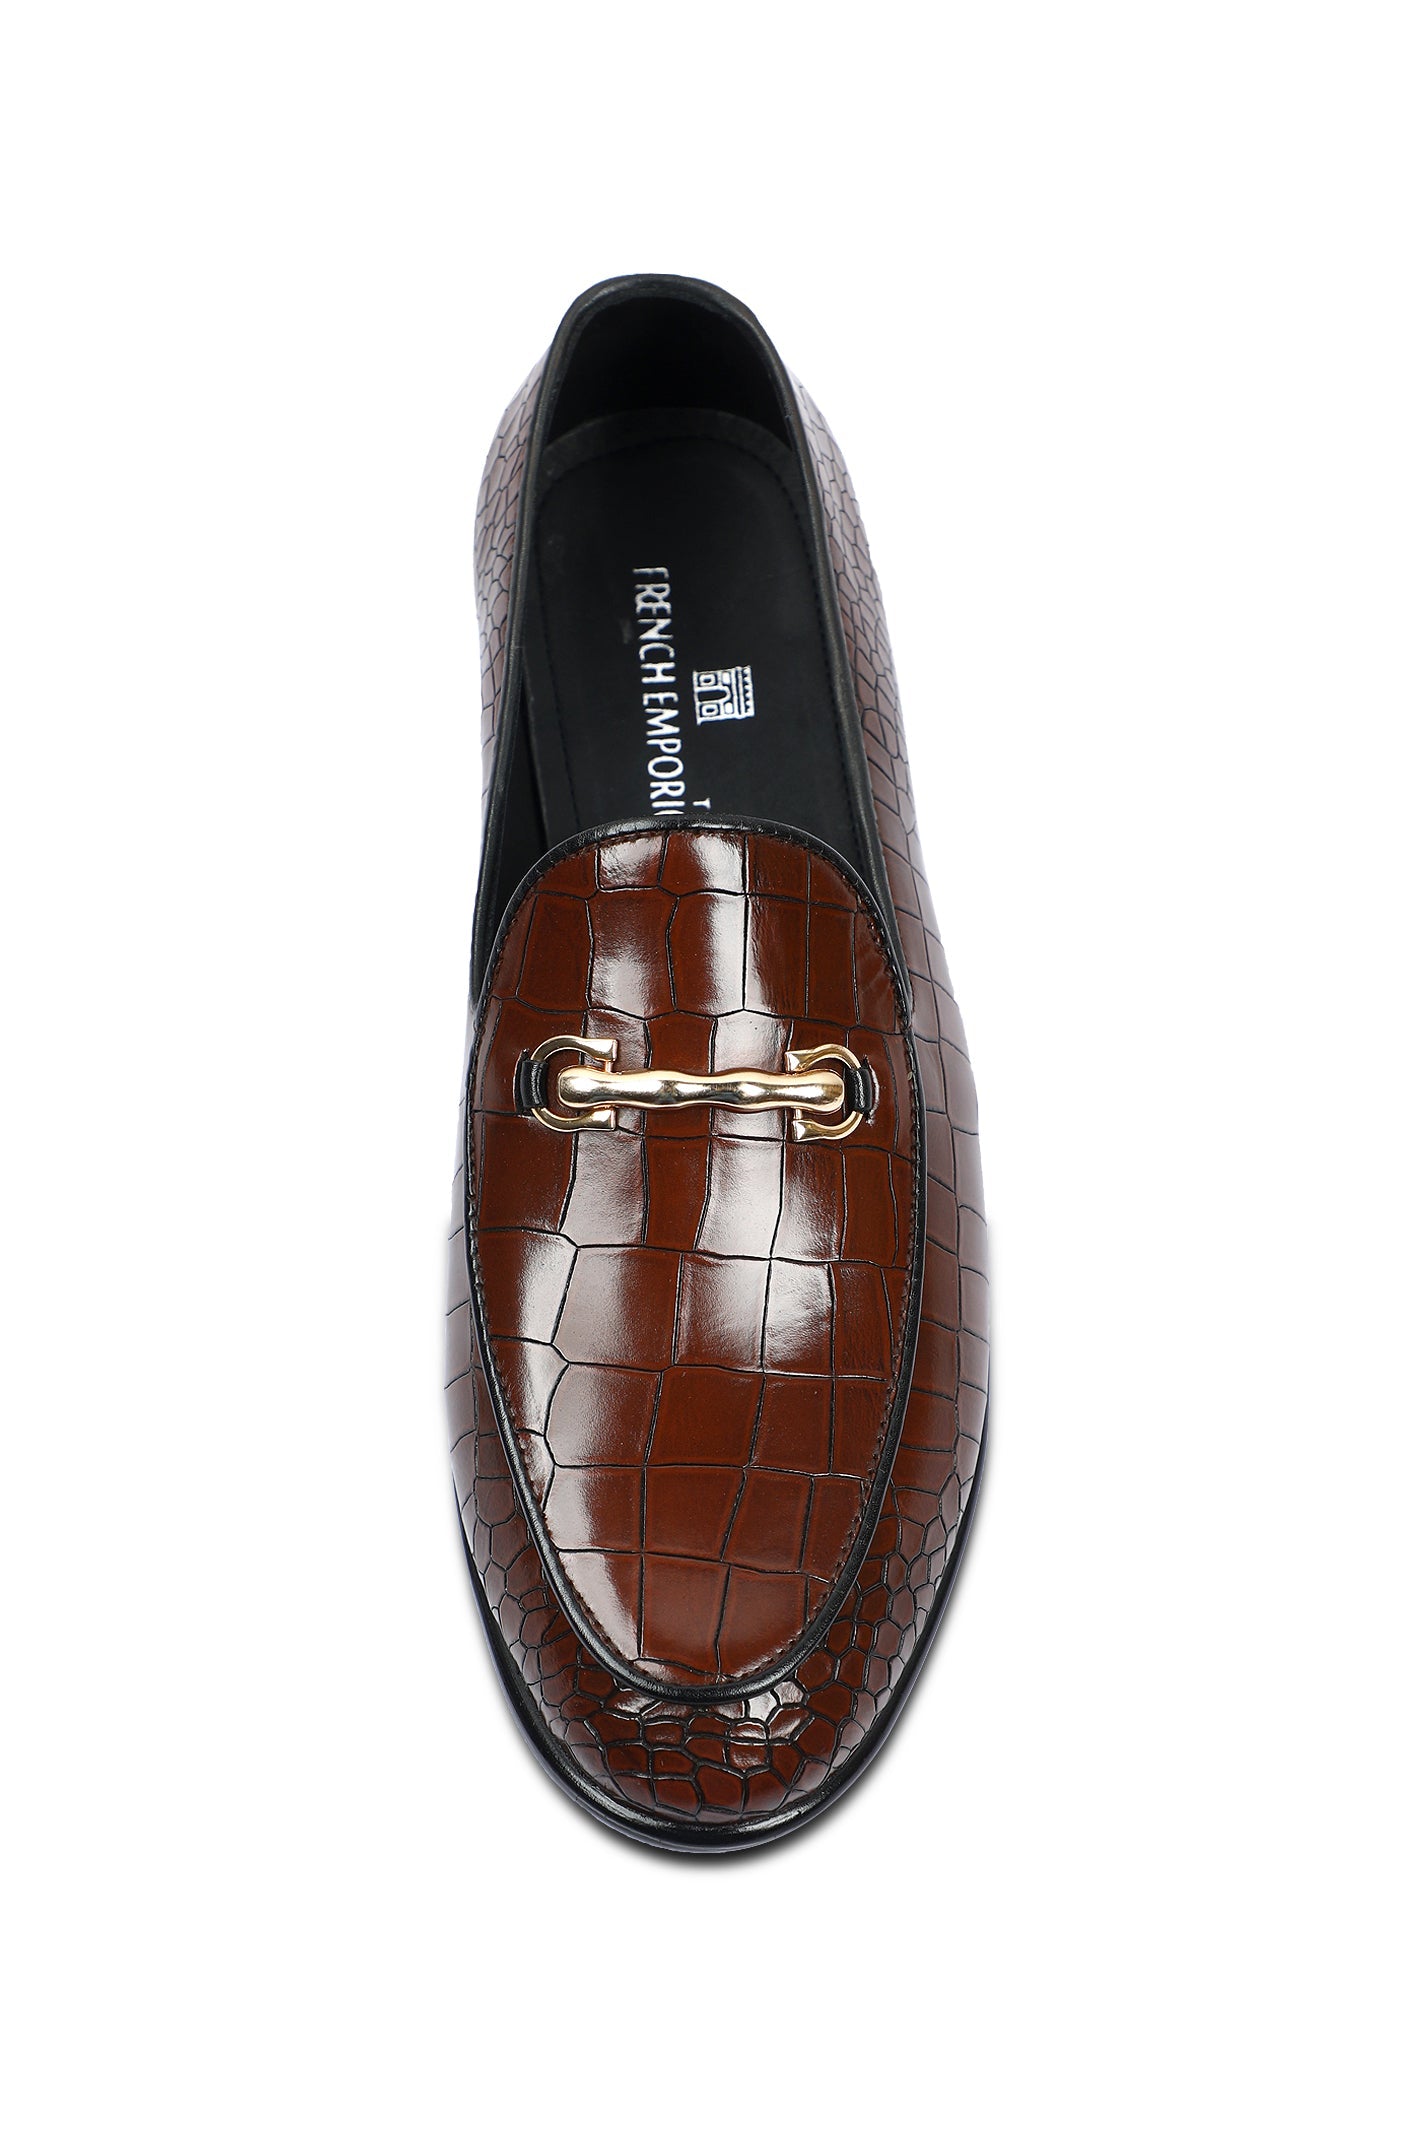 Formal Shoes For Men in Brown SKU: SMF-0200-BROWN - Diners